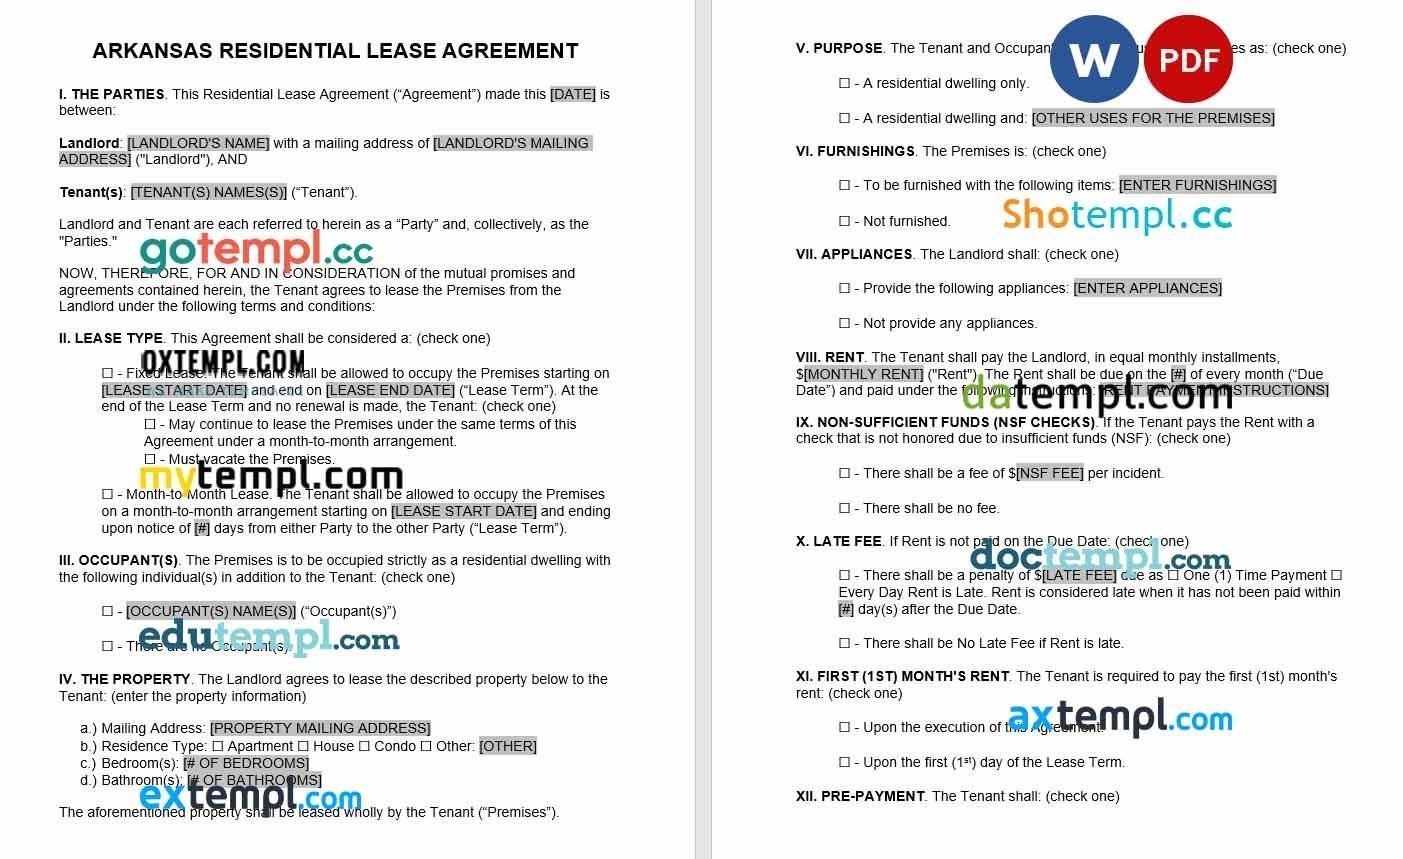 Arkansas standard Residential Lease Agreement Word example, fully editable